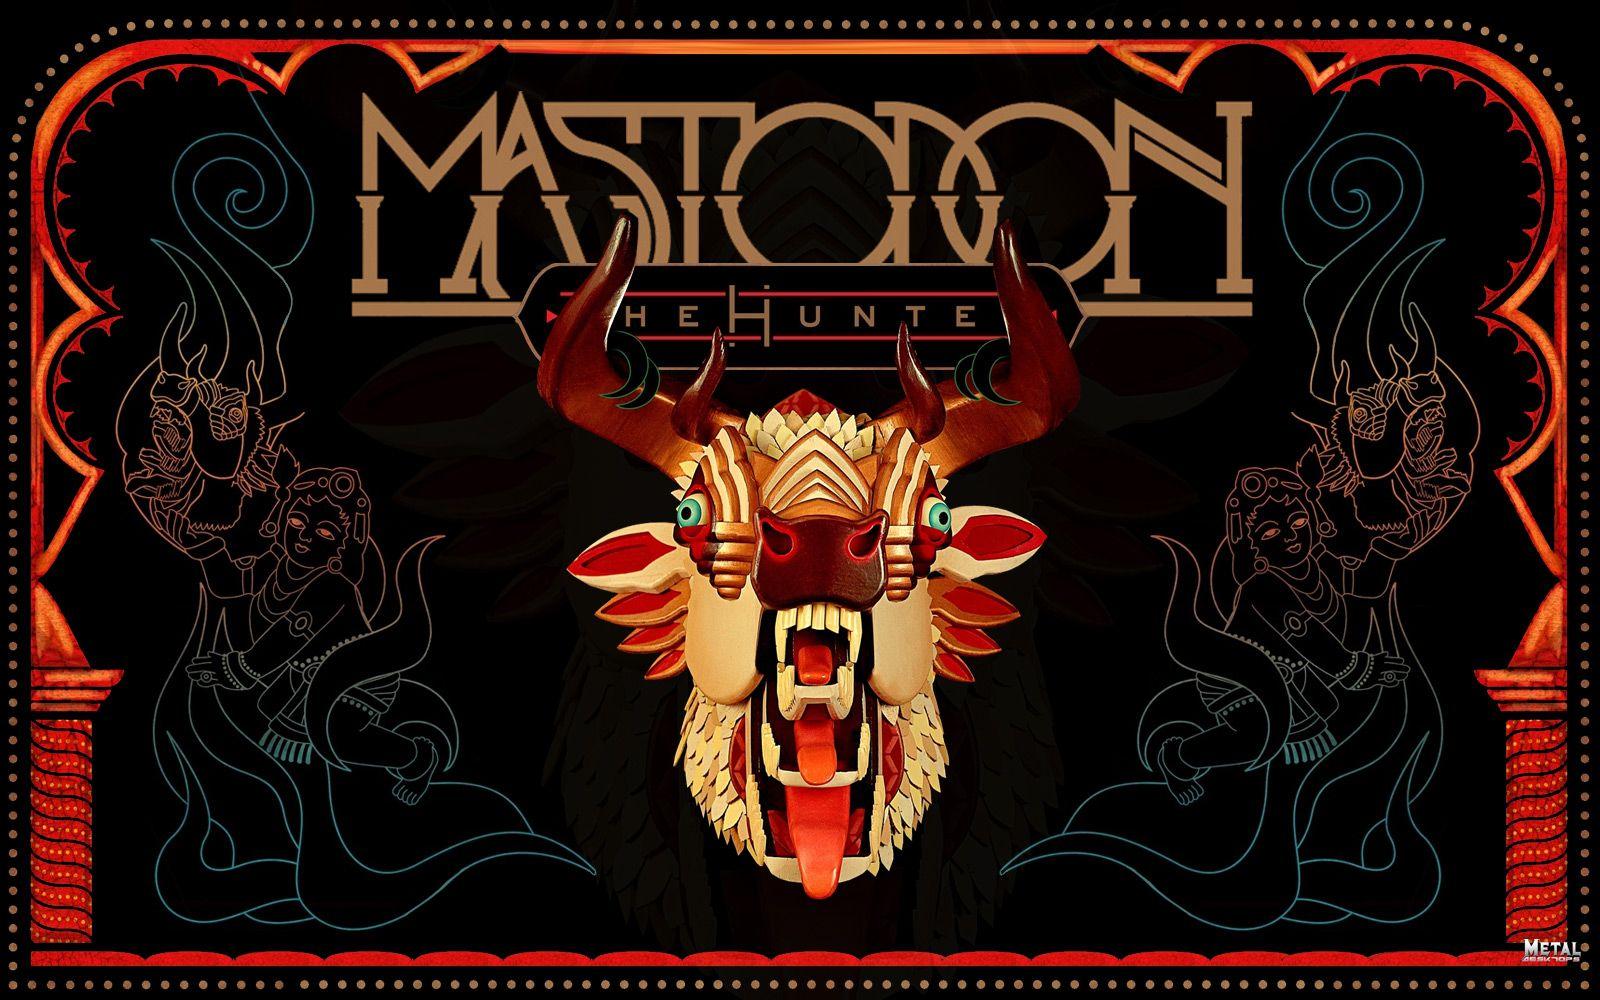 Mastodon Wallpaper